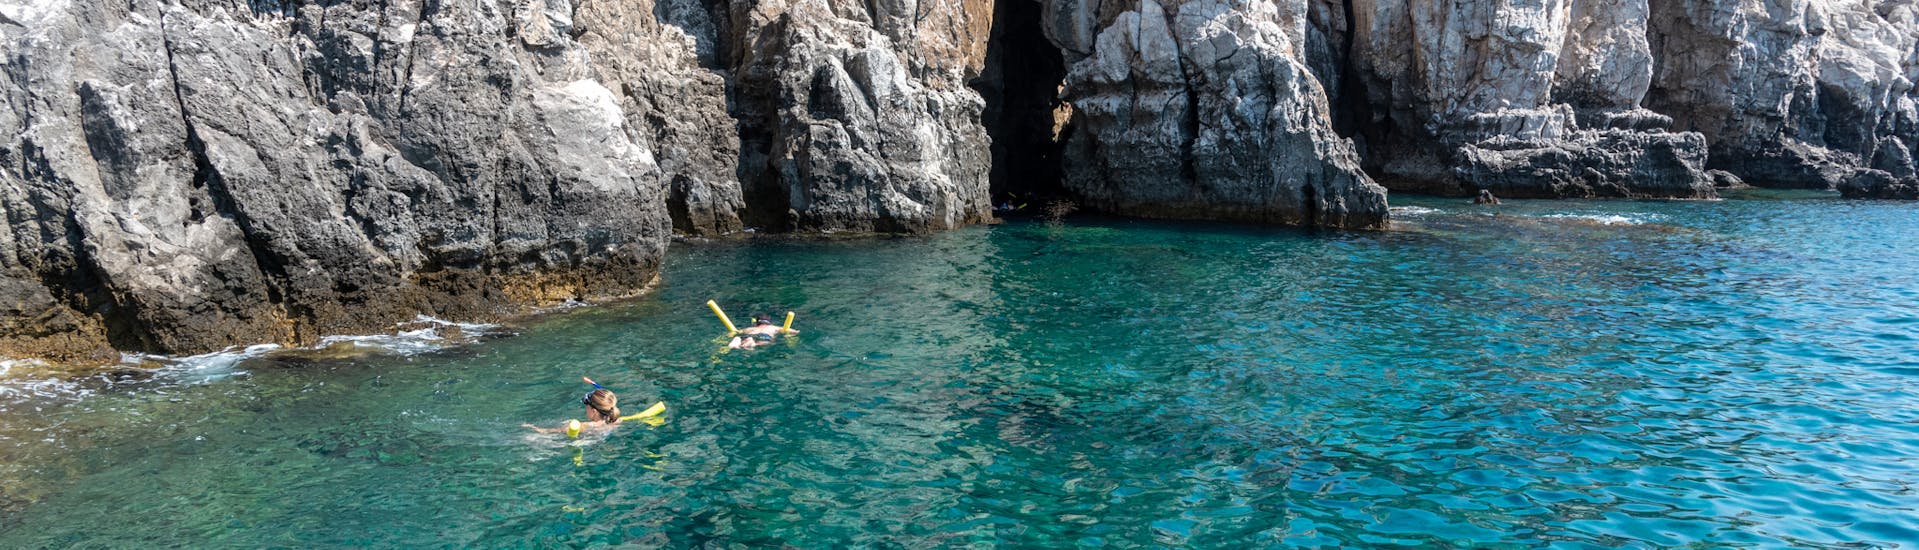 Gita in barca da Faliraki a Grotte di Traganou  e bagno in mare.